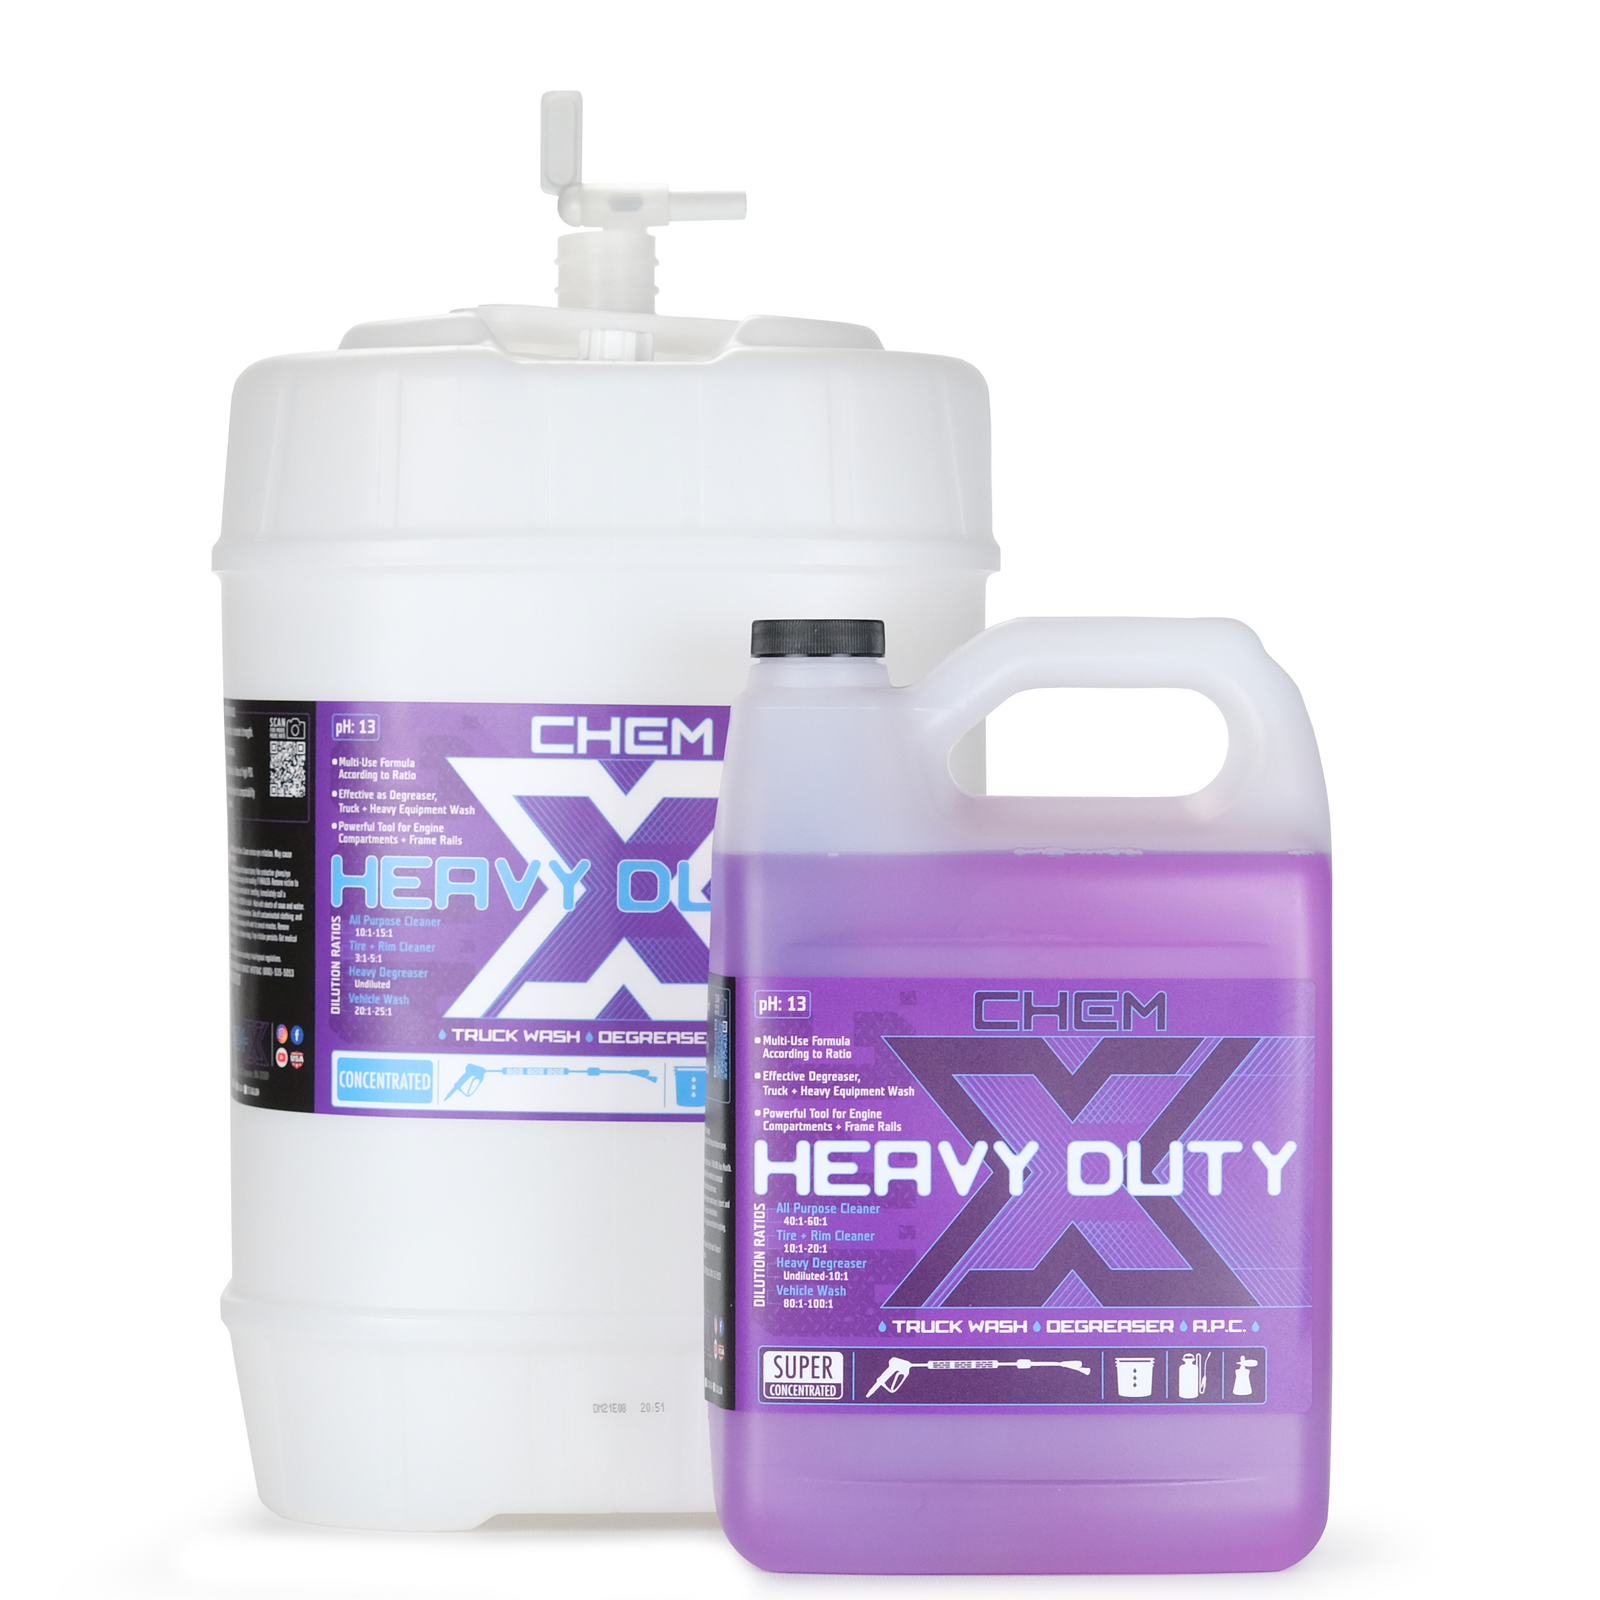 Xpansion Pack: Heavy Duty Mix Kit